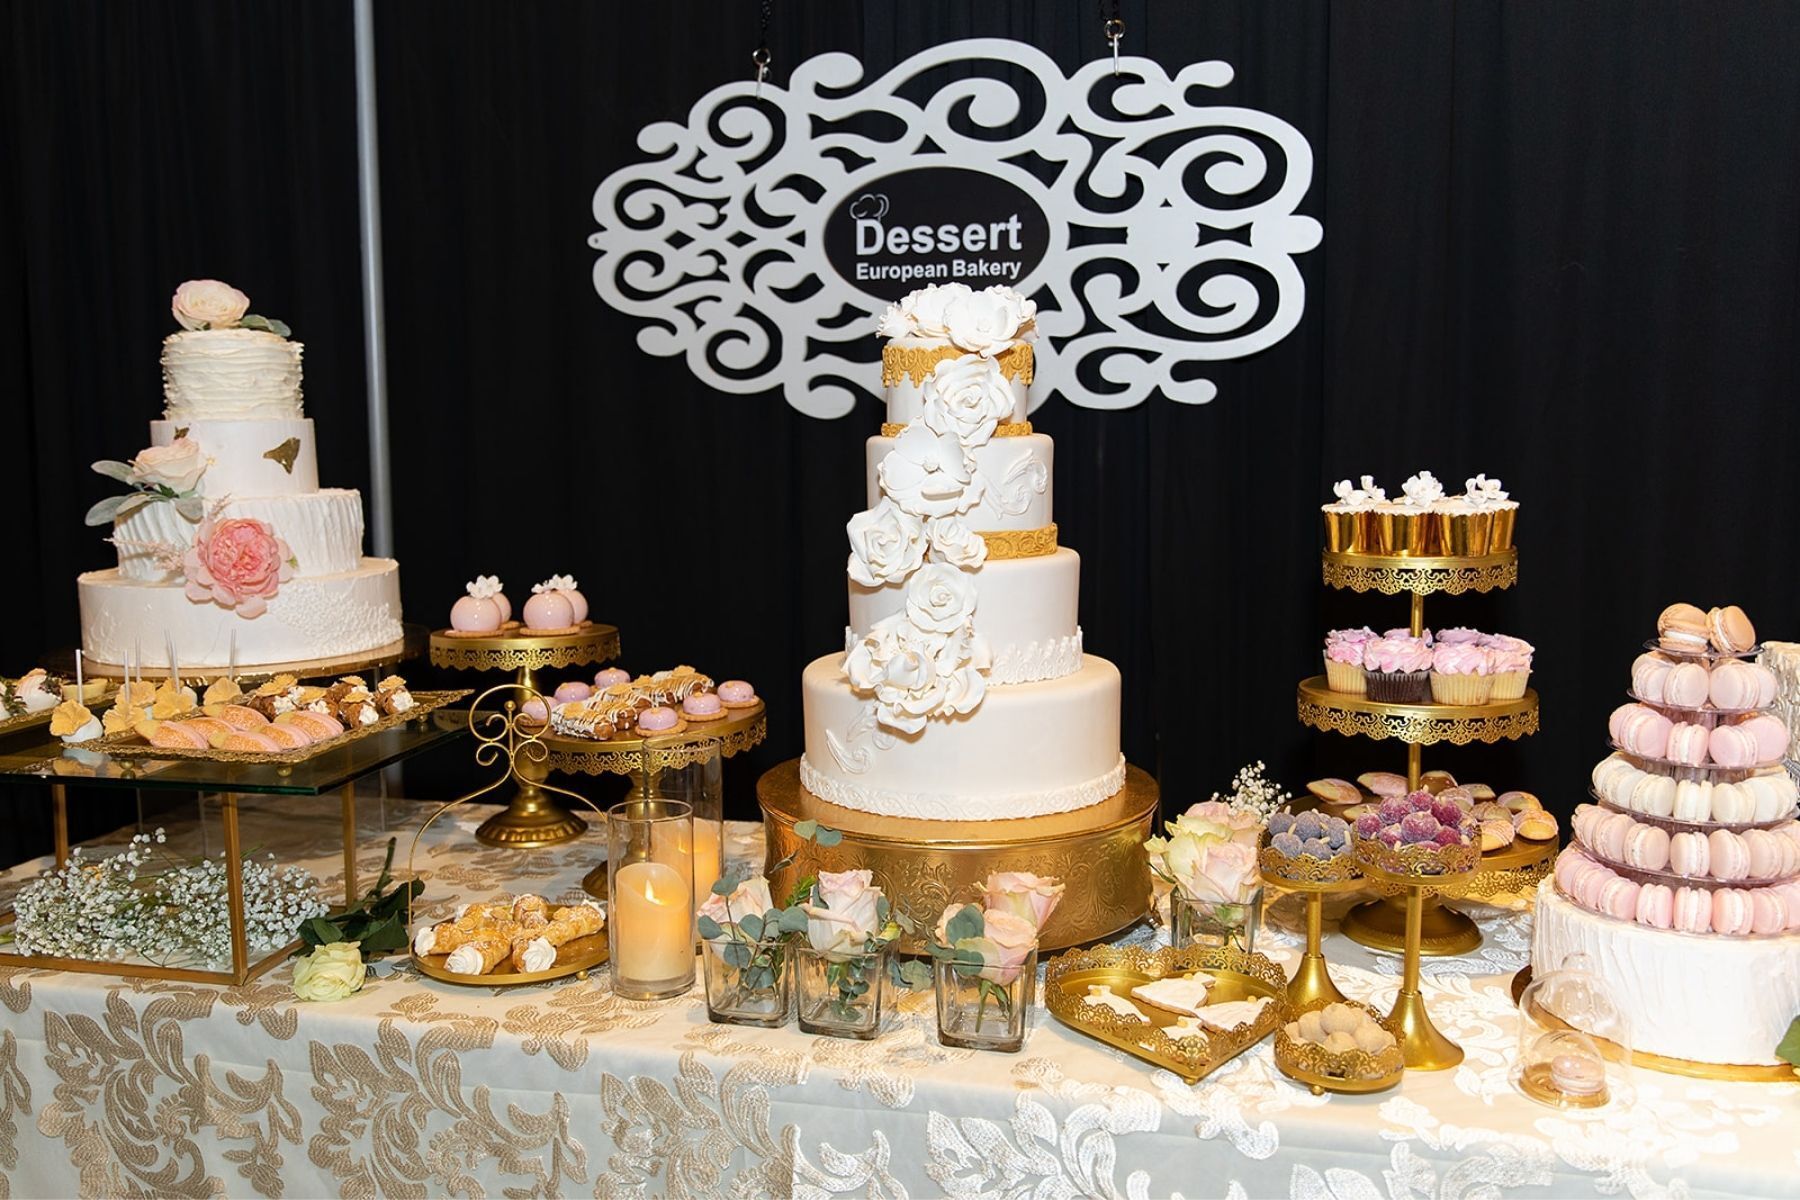 sunrise bakery booth and wedding cake at modesto bridal show at modesto centre plaza